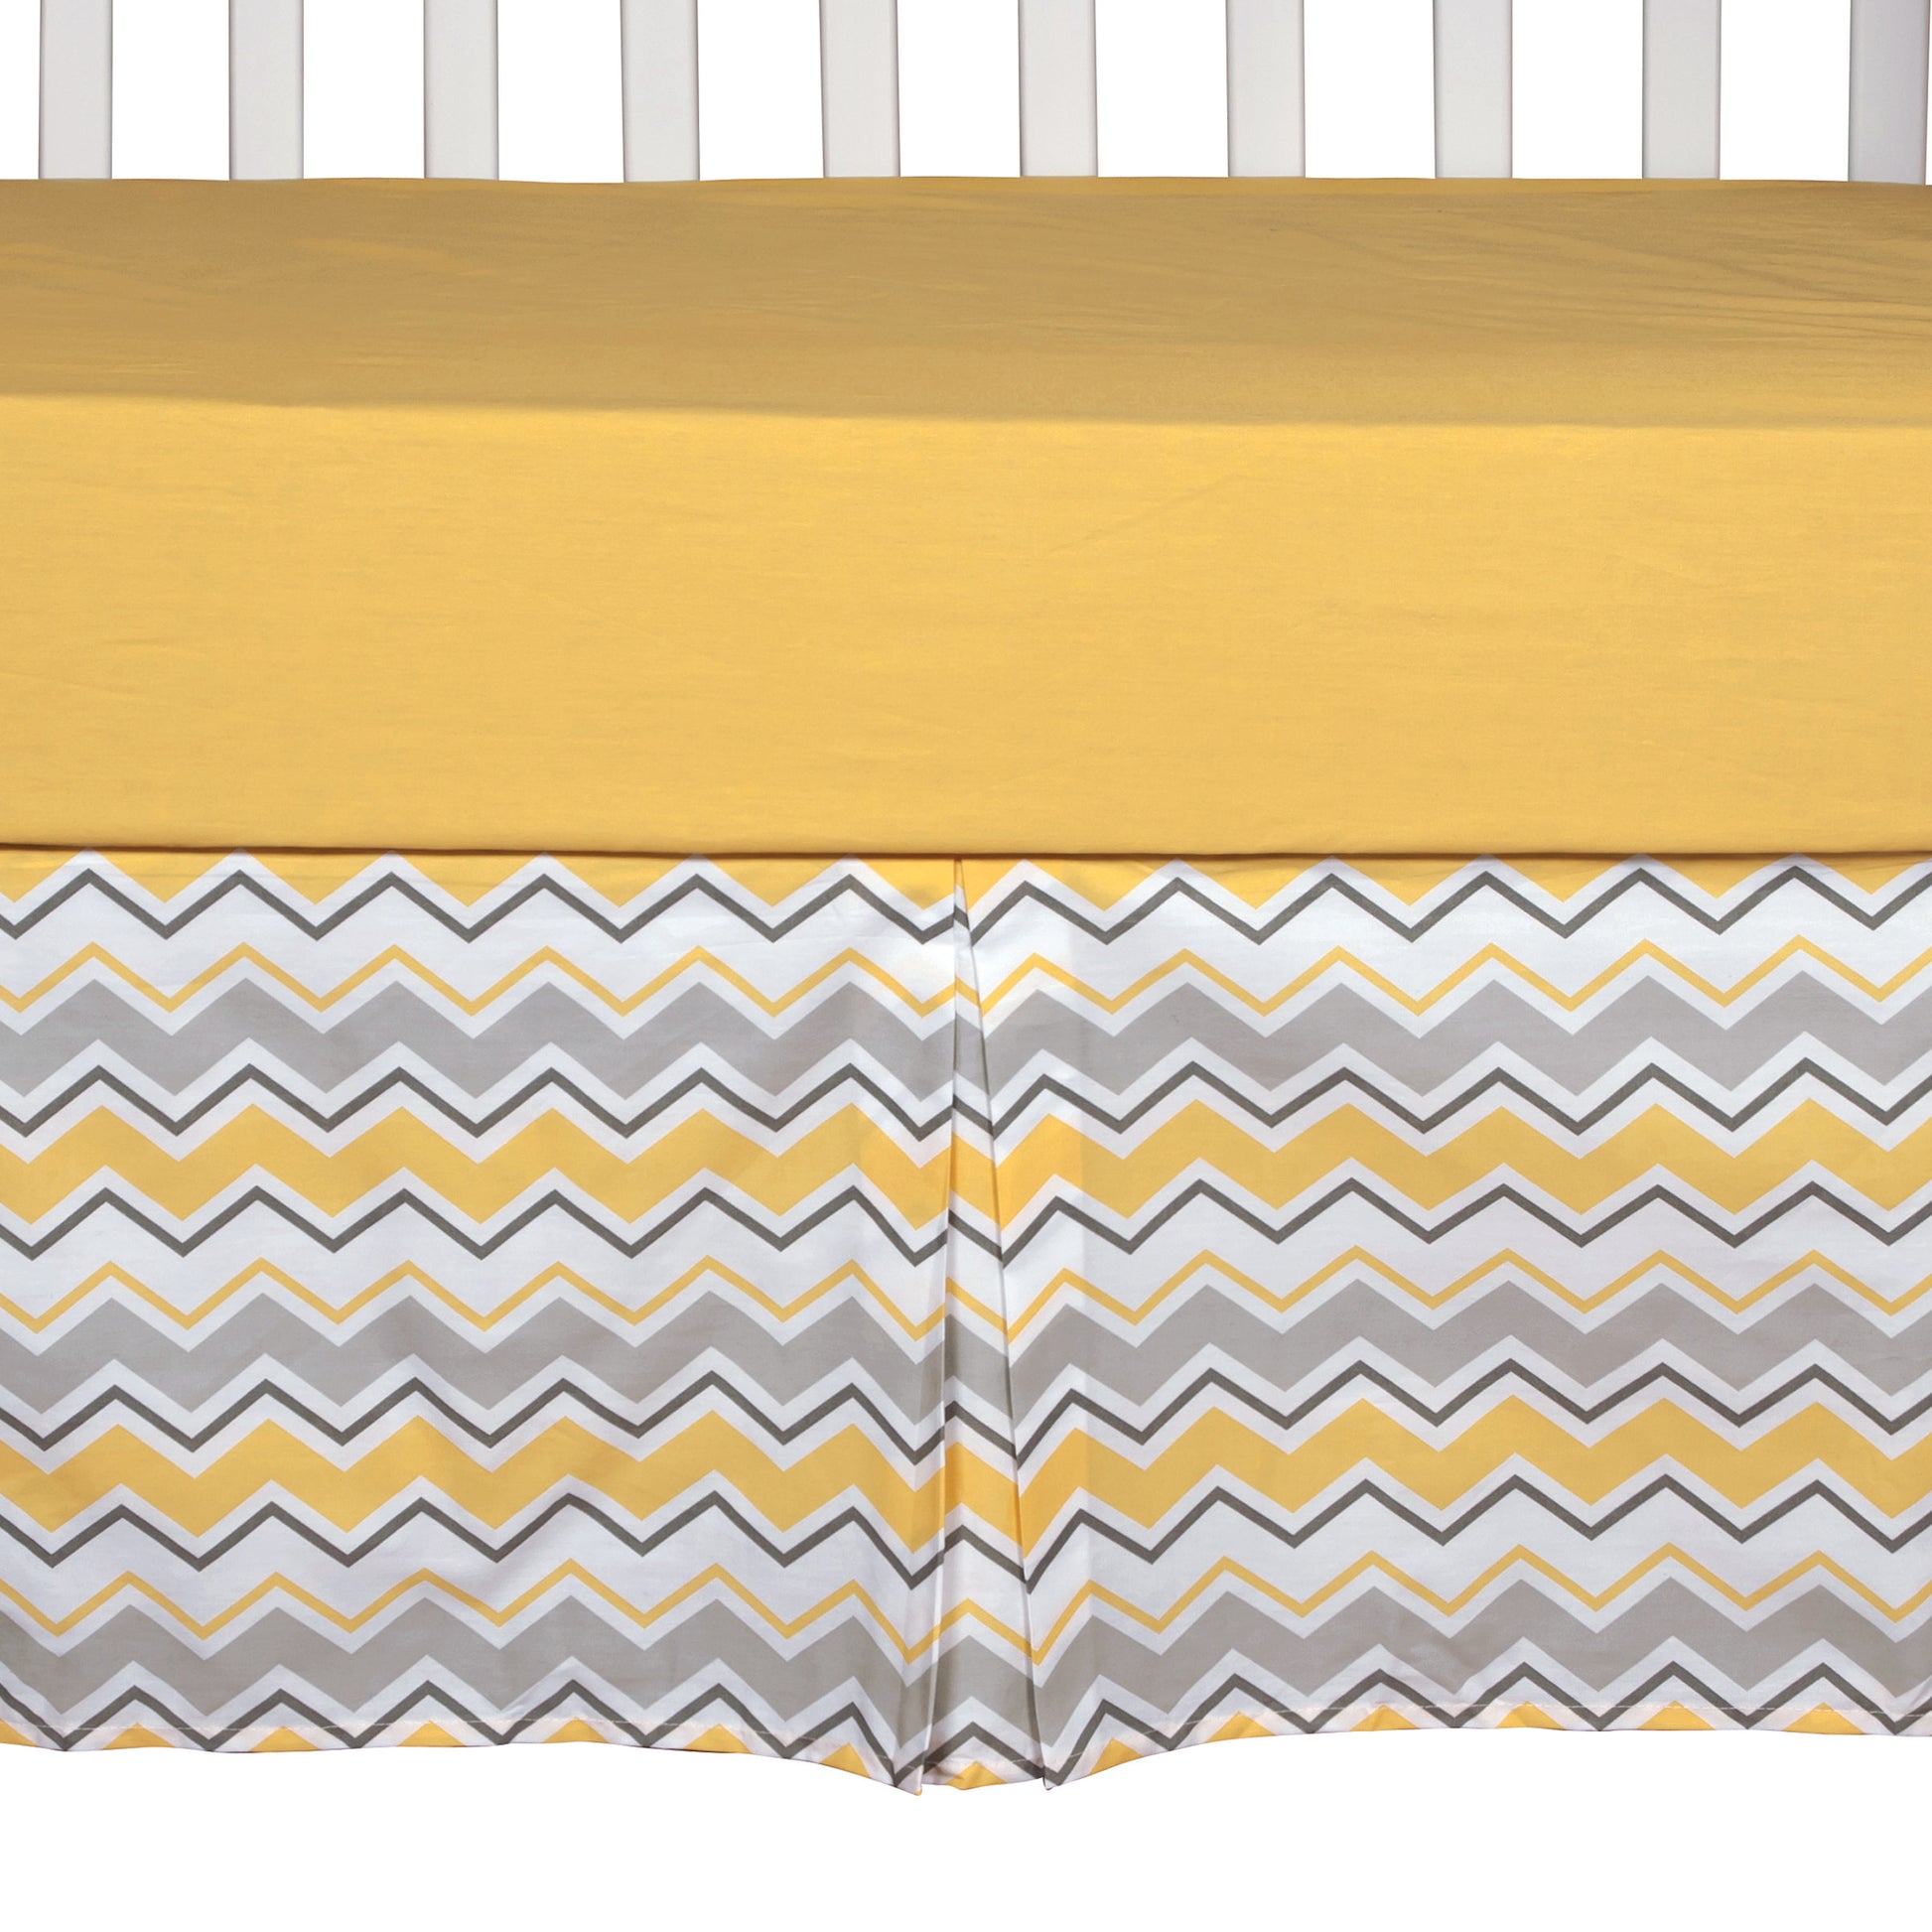 Buttercup Zigzag 3 Piece Crib Bedding Set- crib sheet and crib skirt